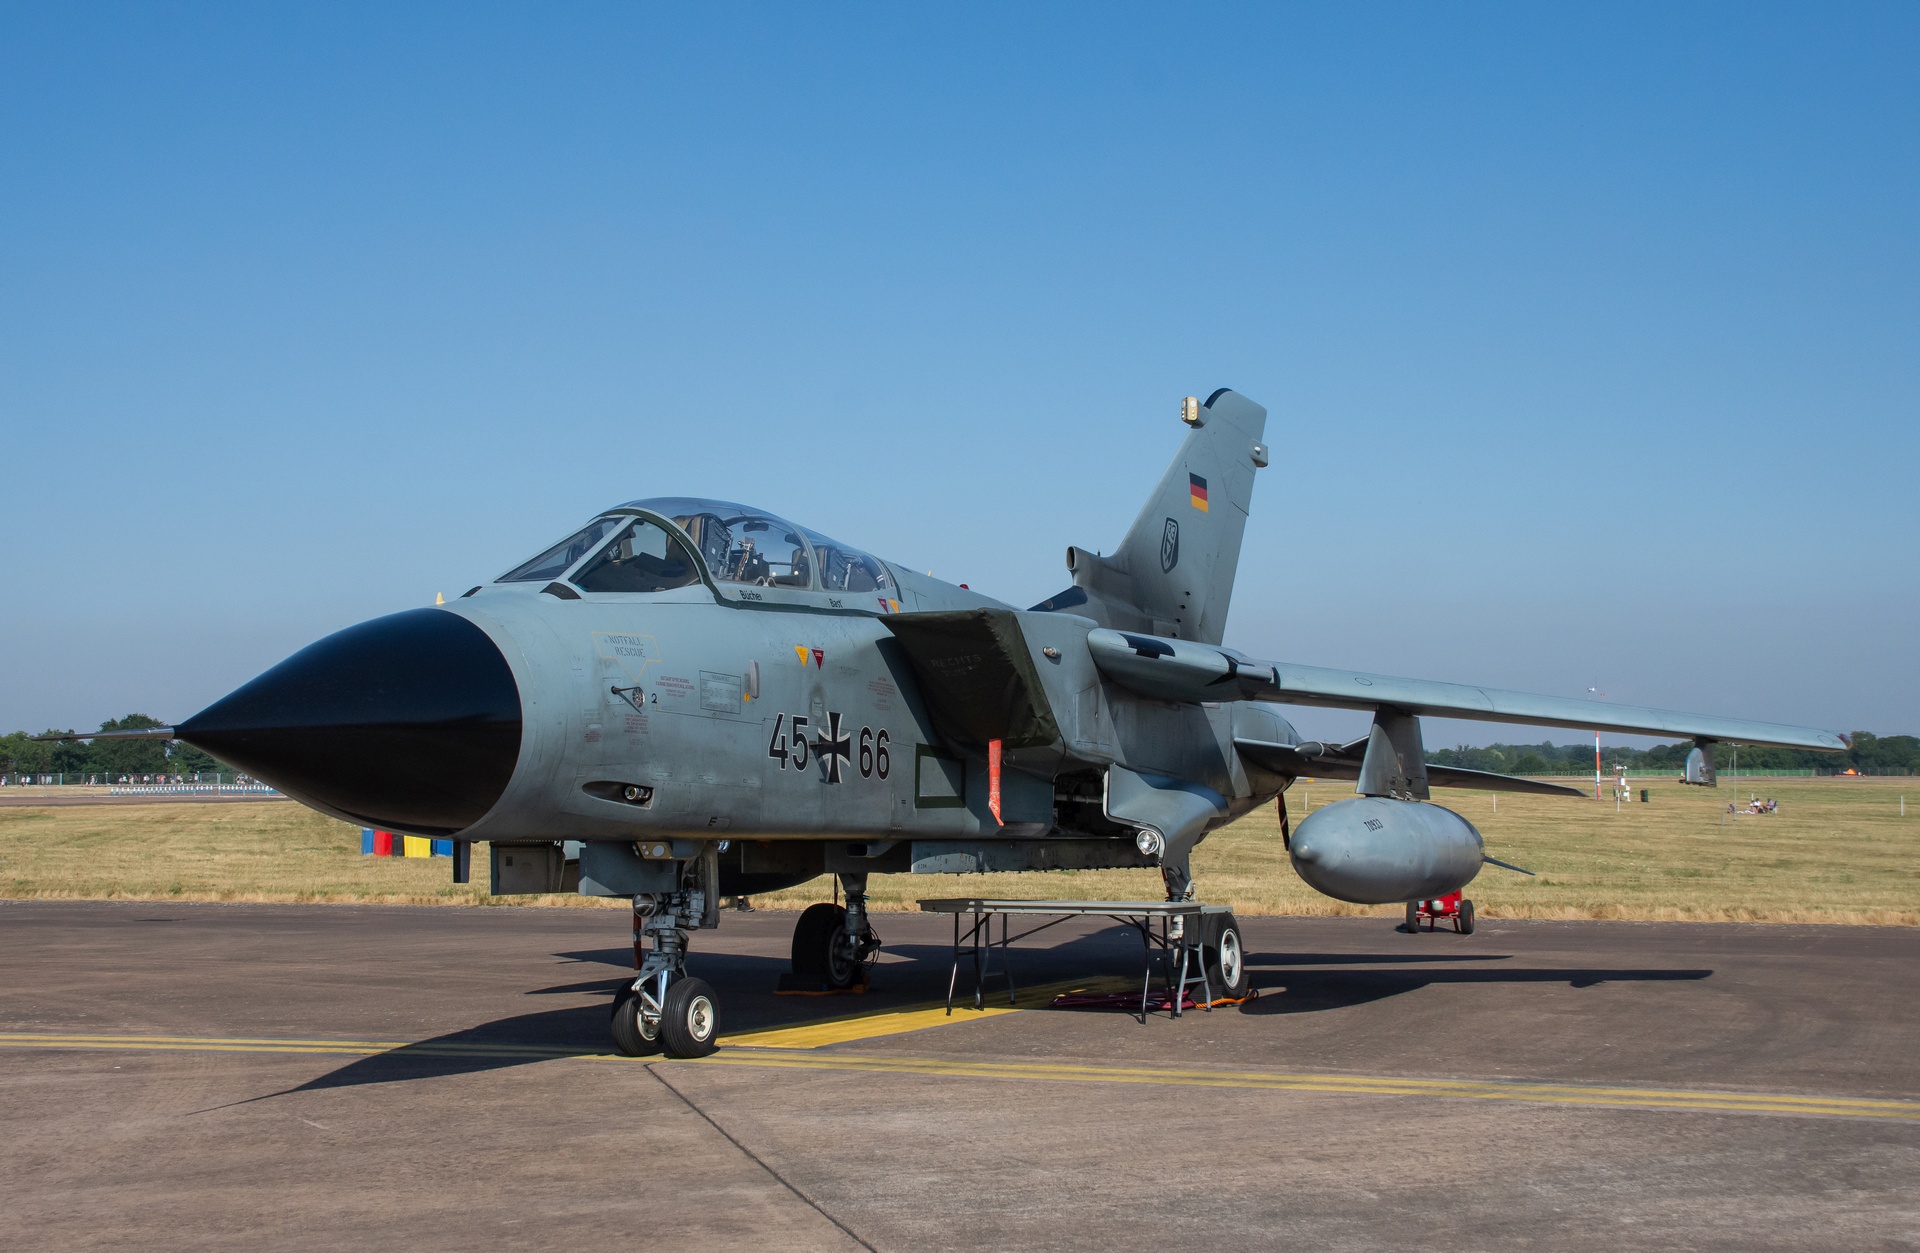 45+66/45+66 German Air Force Panavia Tornado Airframe Information - AVSpotters.com